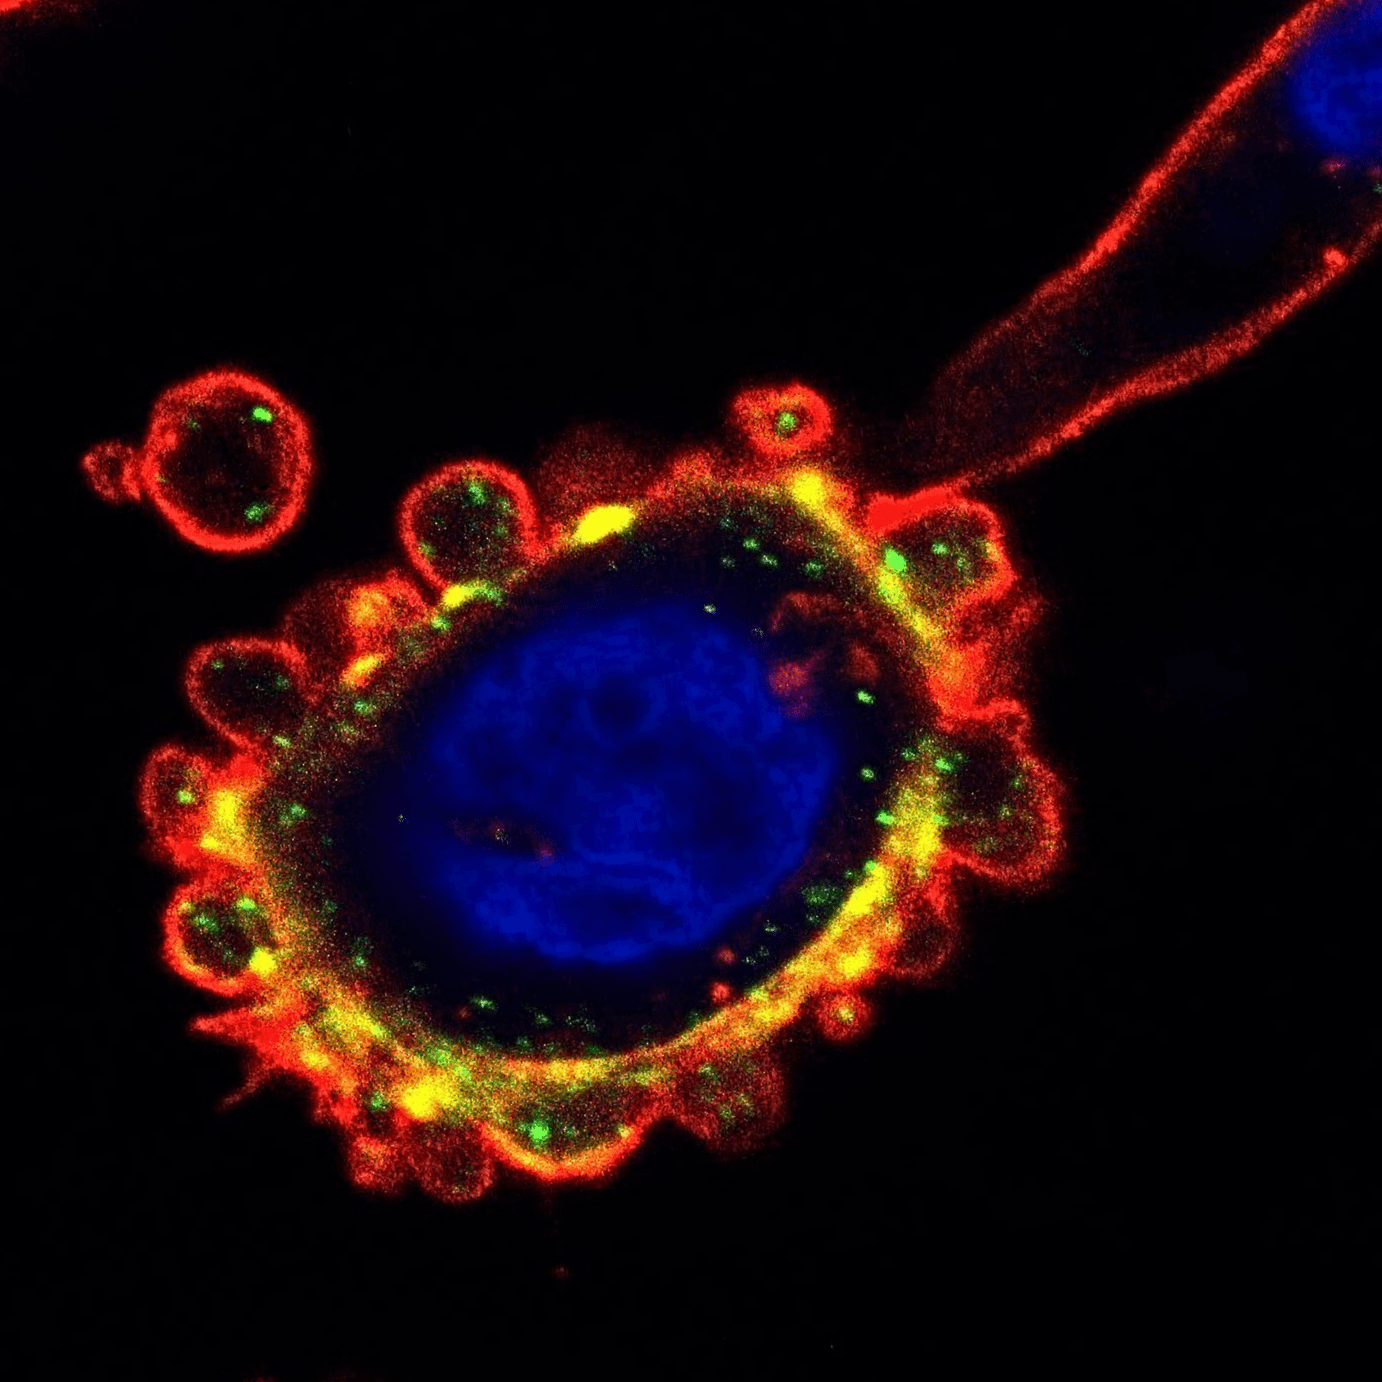 Pancreatic amoeboid cell. Blue: nucleus; red: actin cytoskeleton; green: phosphorylated myosin light chain.